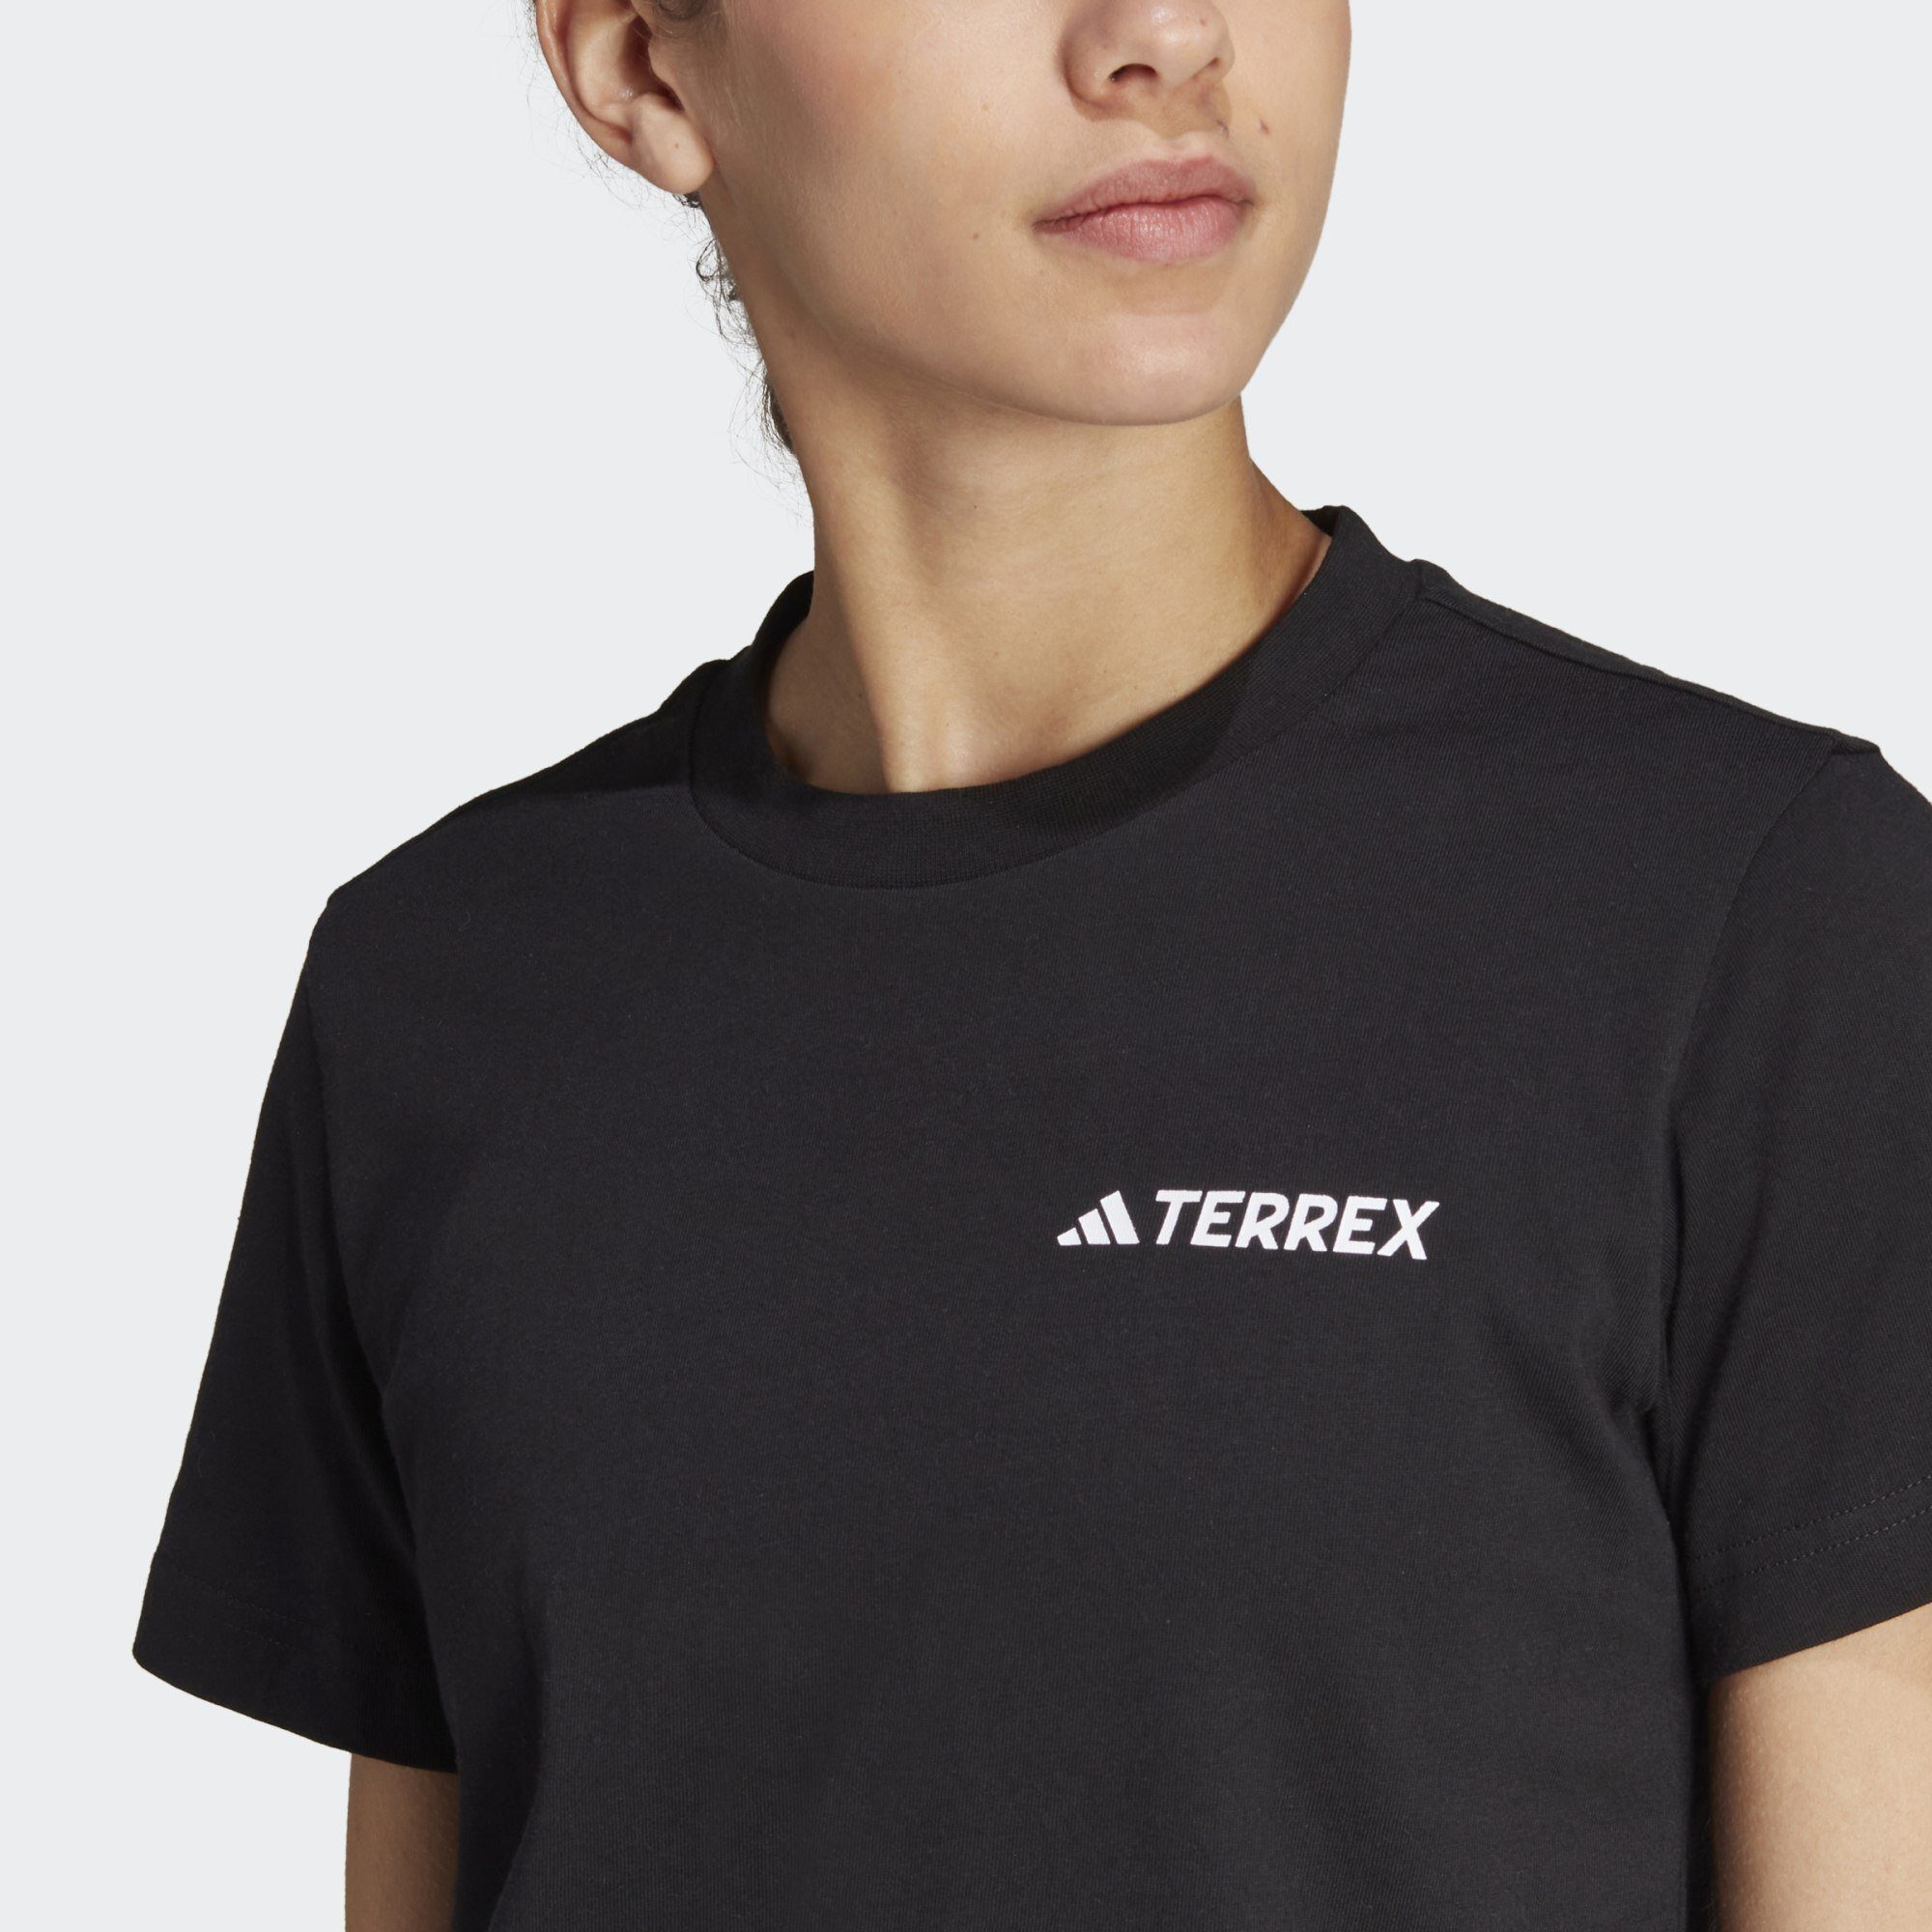 Funktionsshirt ALTITUDE TERREX Black adidas GRAPHIC TERREX T-SHIRT